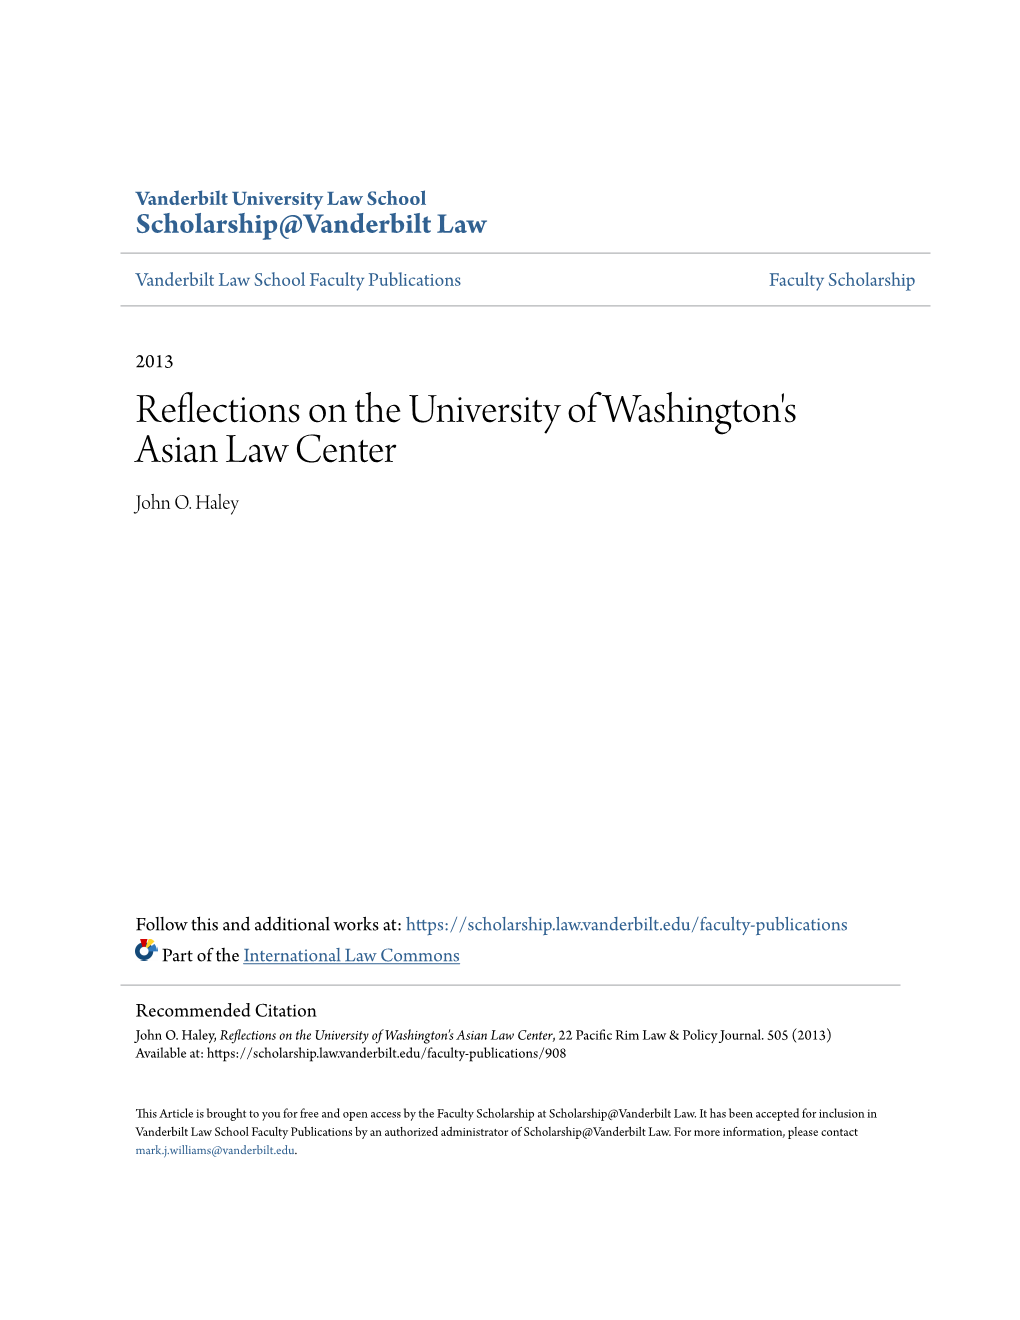 Reflections on the University of Washington's Asian Law Center John O